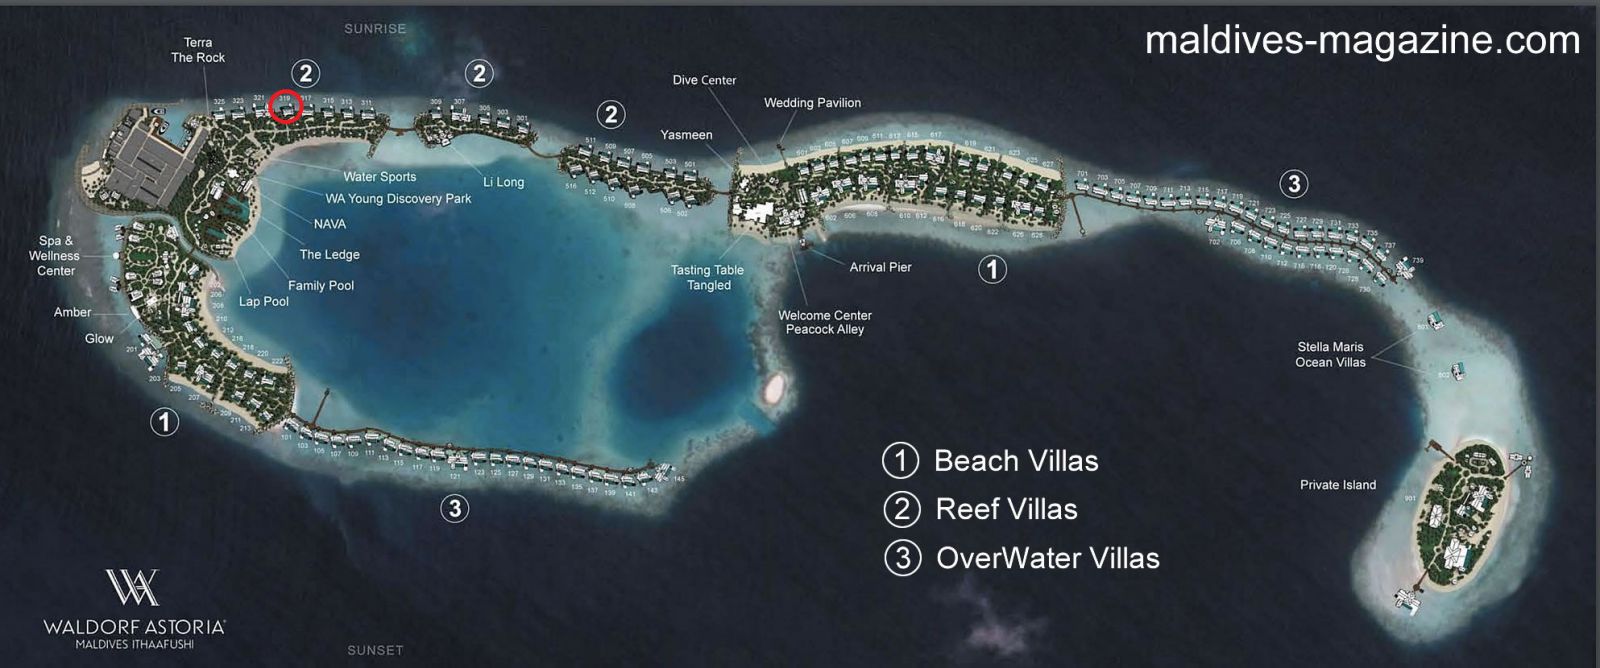 waldorf-astoria-maldives-ithaafushi-resort-map2.jpg